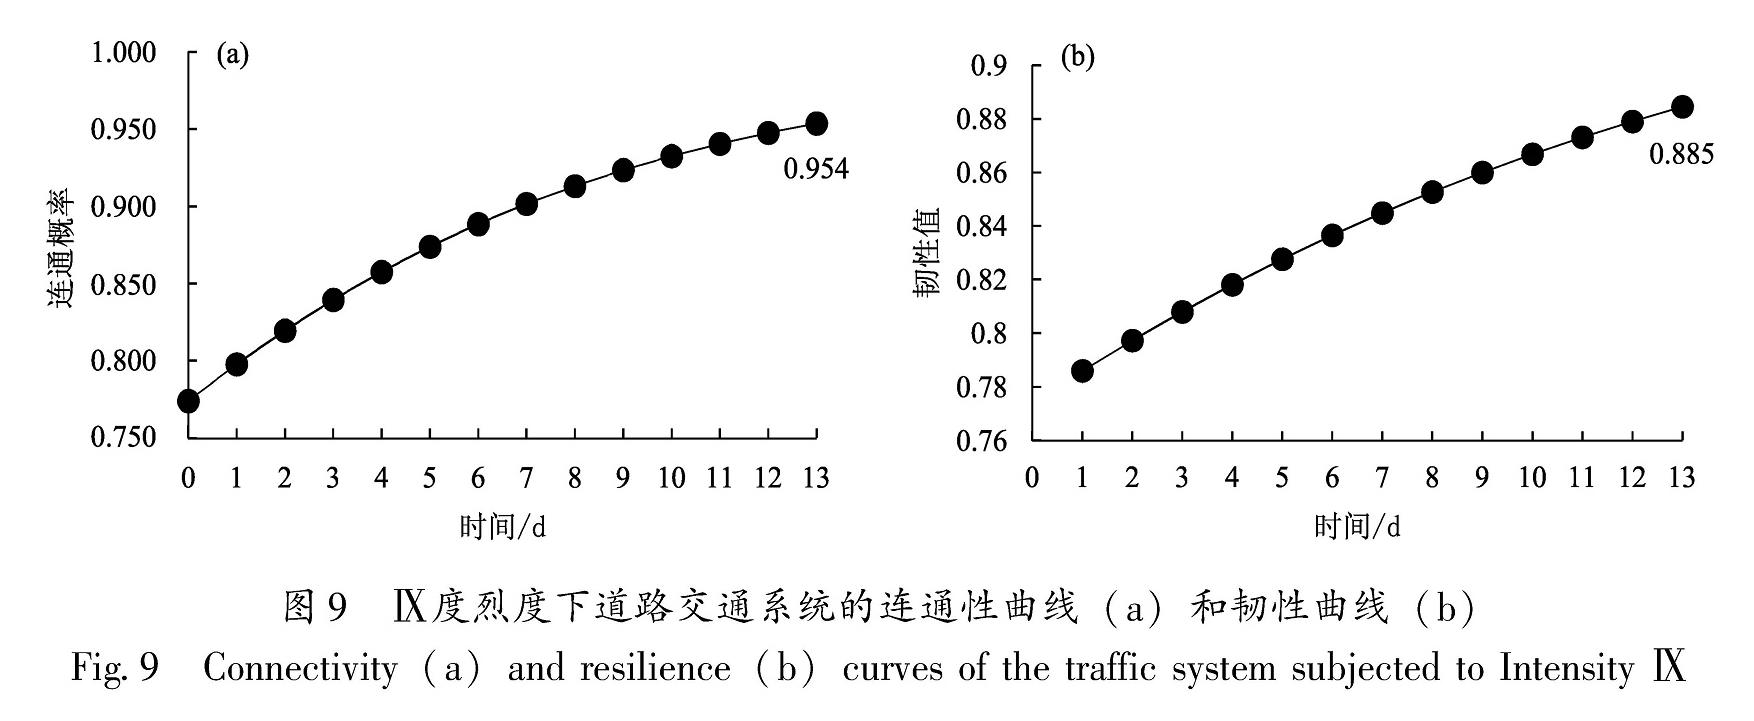 图9 Ⅸ度烈度下道路交通系统的连通性曲线(a)和韧性曲线(b)<br/>Fig.9 Connectivity(a)and resilience(b)curves of the traffic system subjected to Intensity Ⅸ